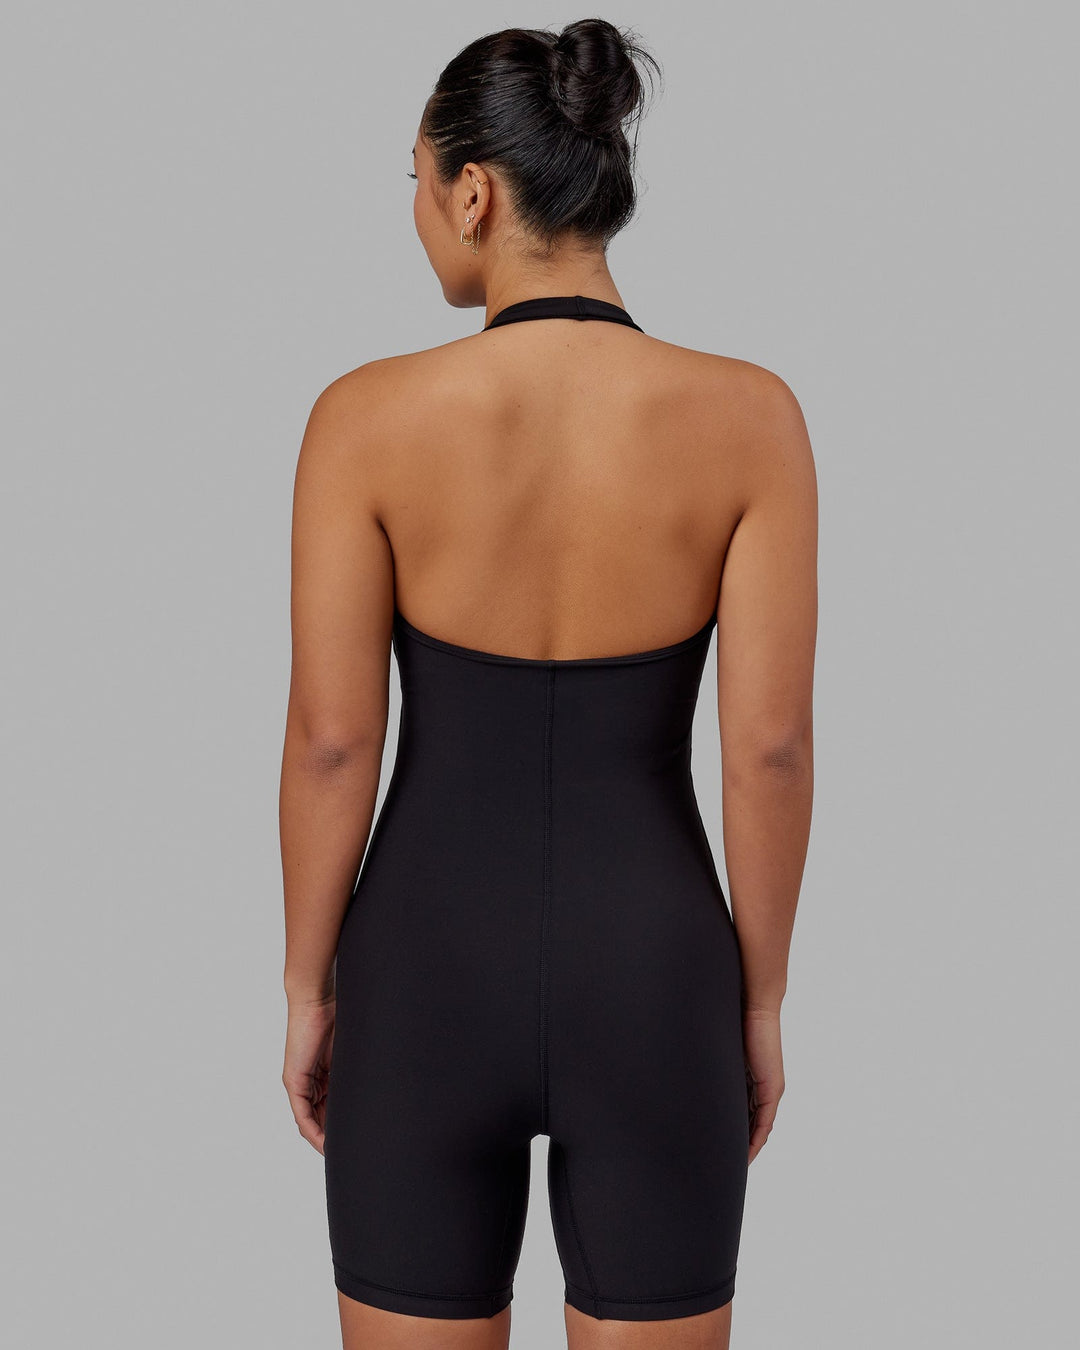 Woman wearing Challenger Bodysuit - Black